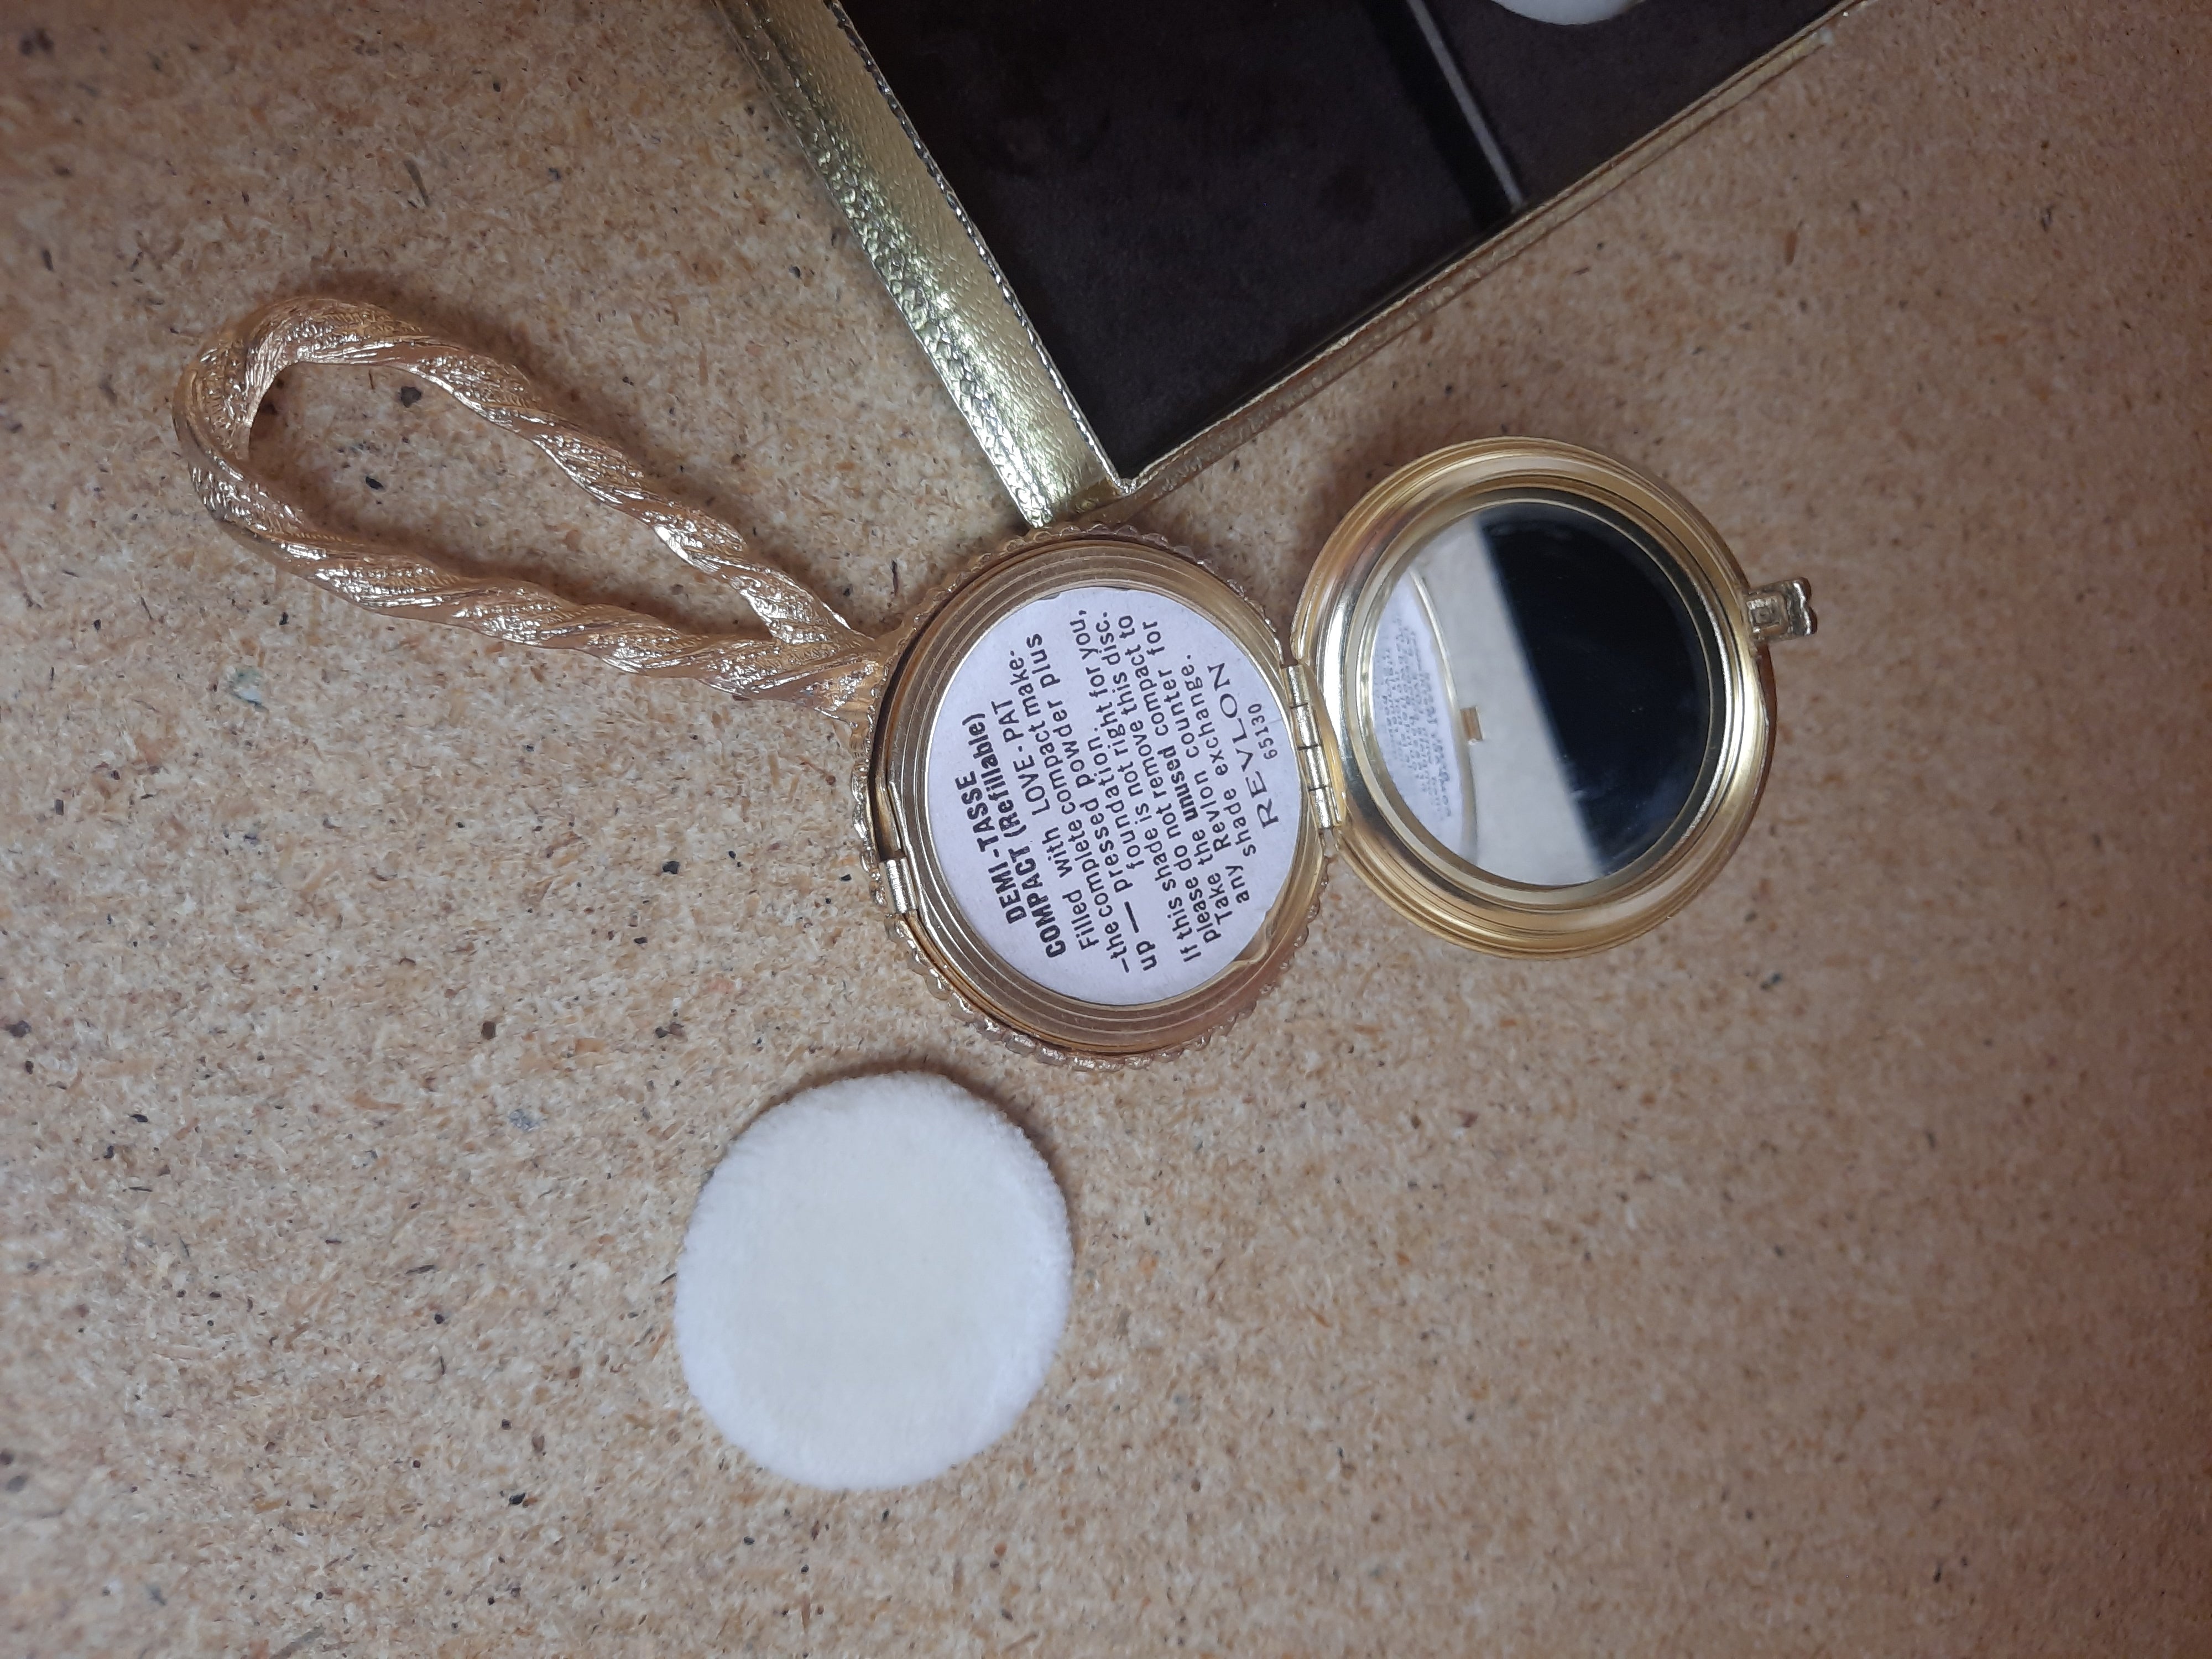 Revlon Make up powder compact mirror